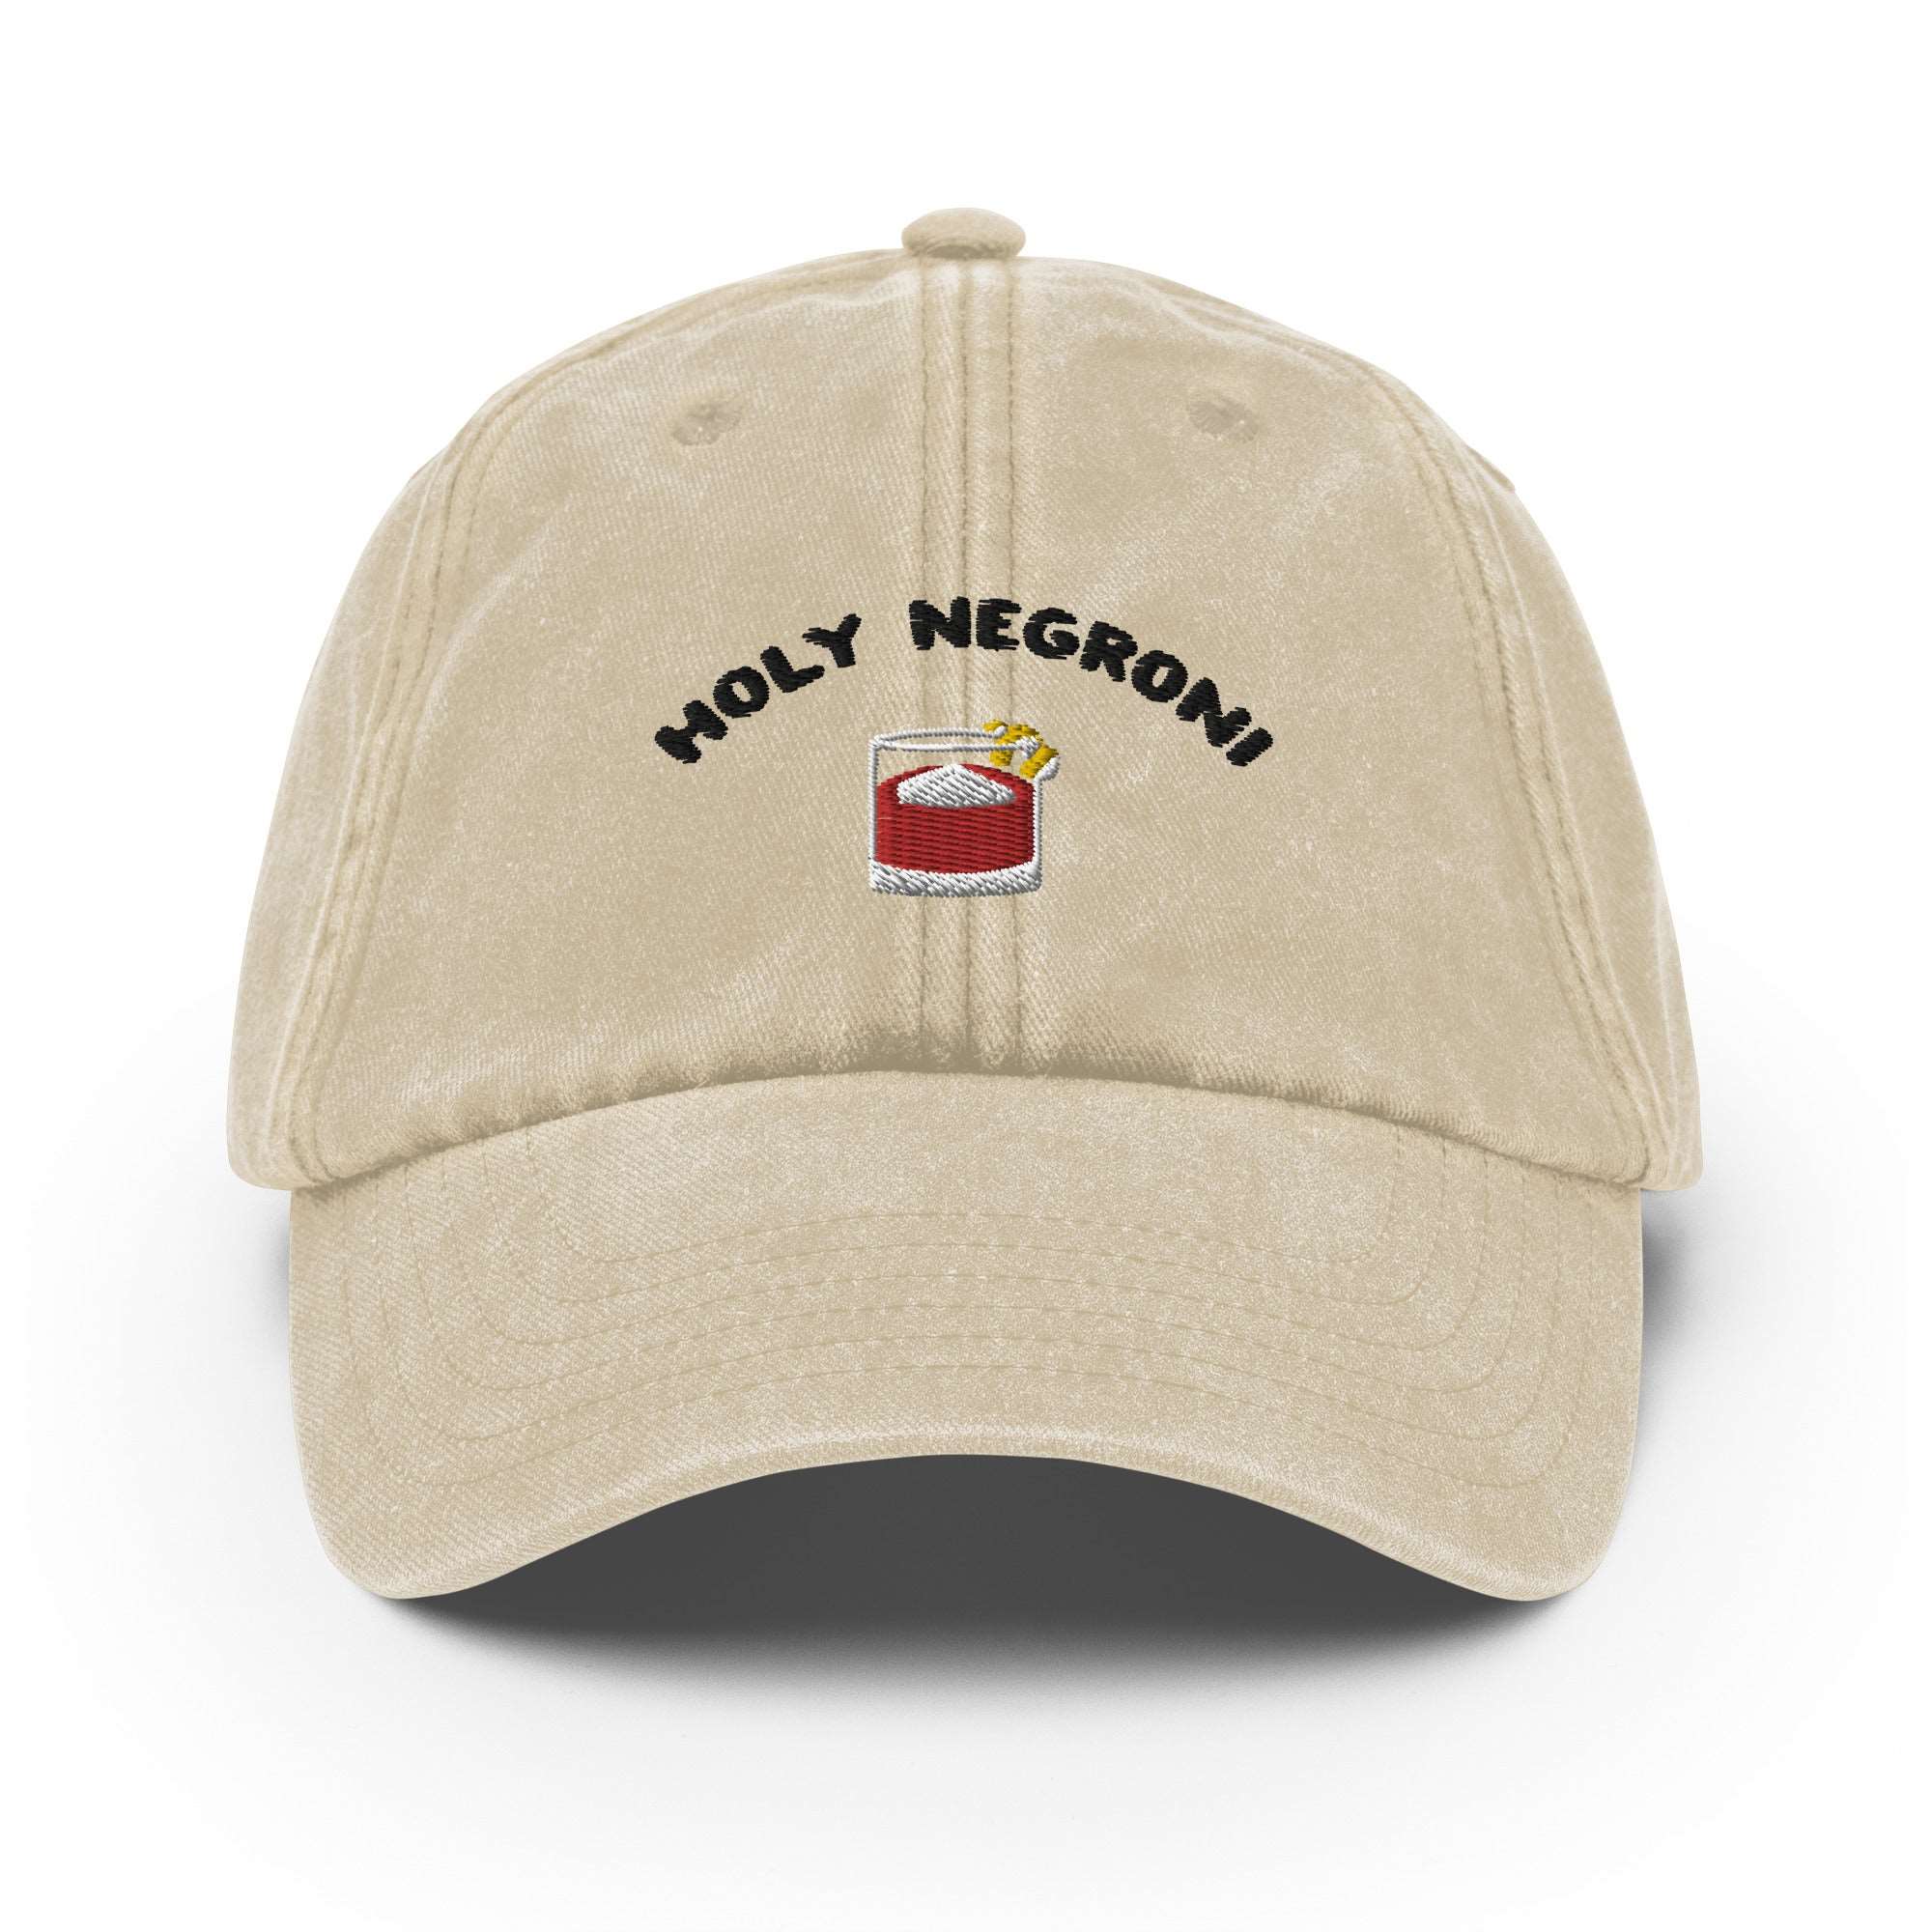 Holy Negroni Vintage Cap - The Refined Spirit